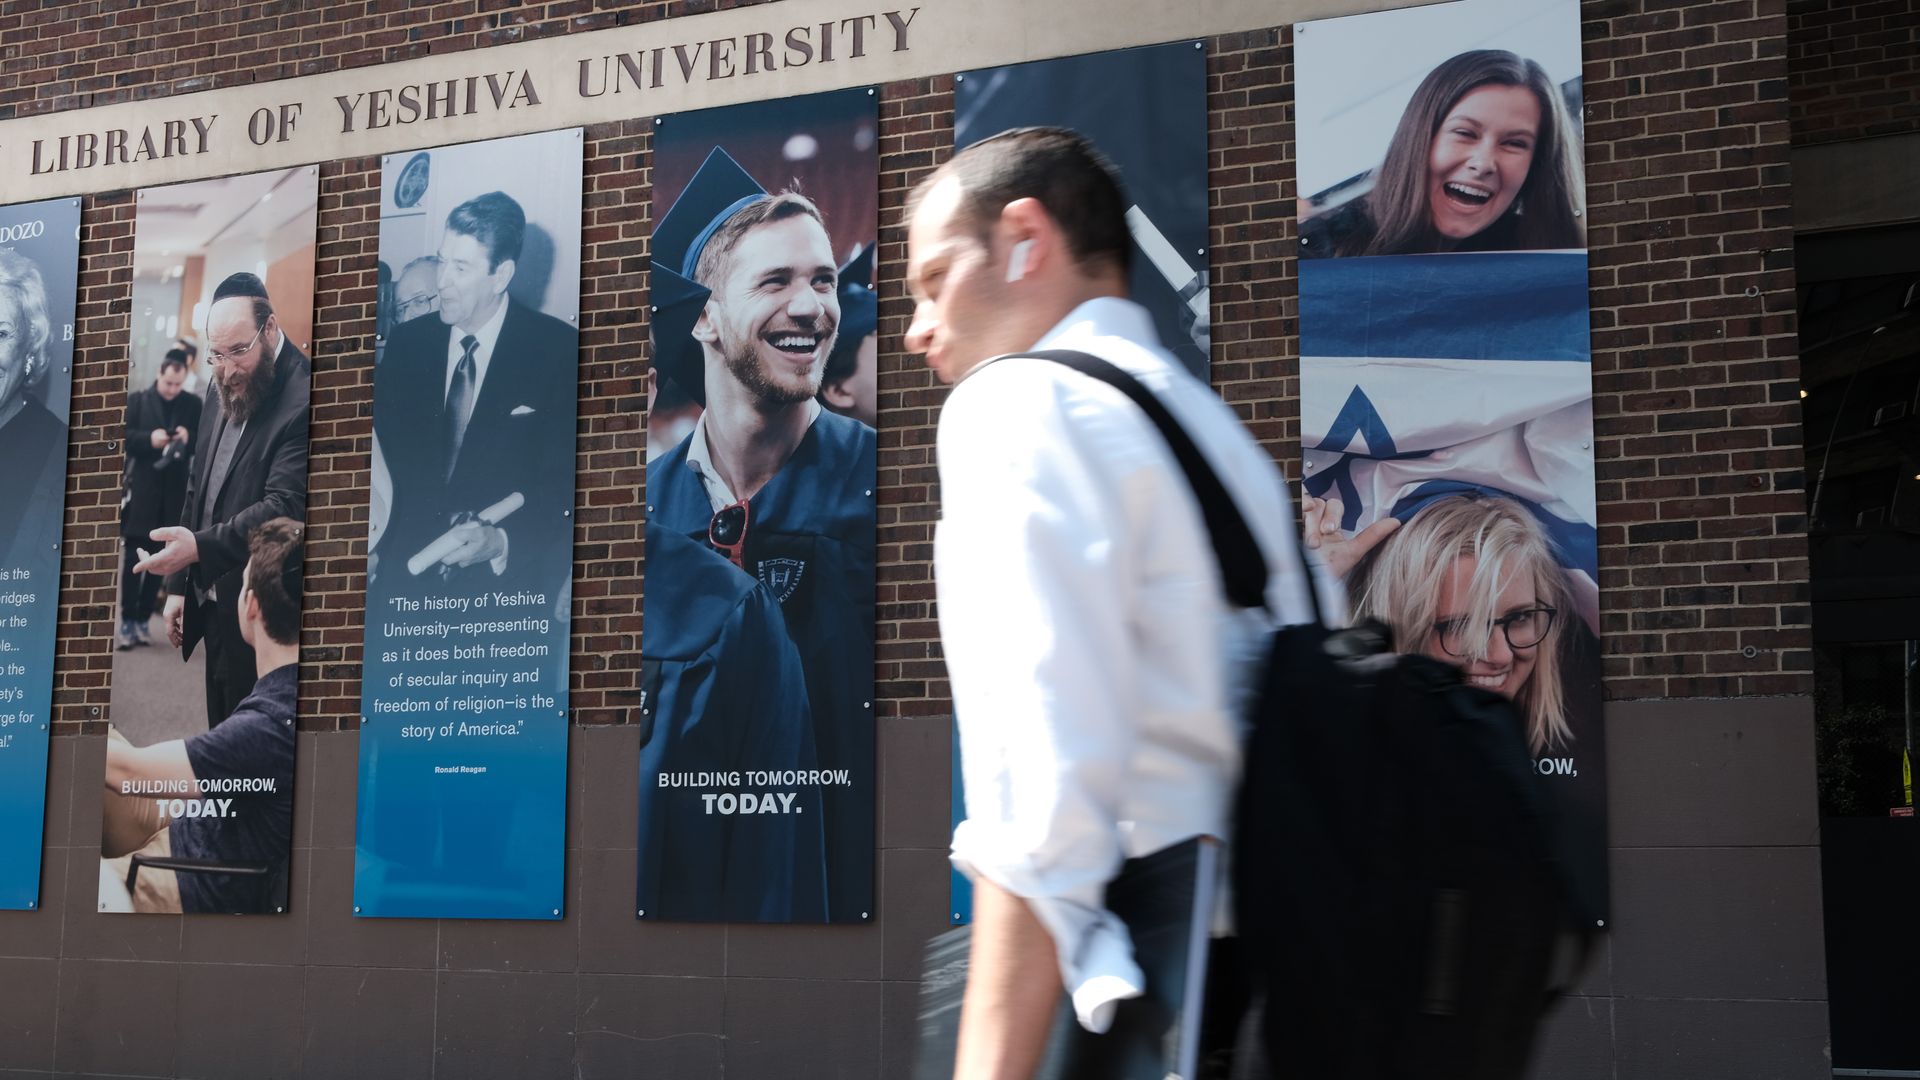 New York's Yeshiva University halts student clubs in dispute over